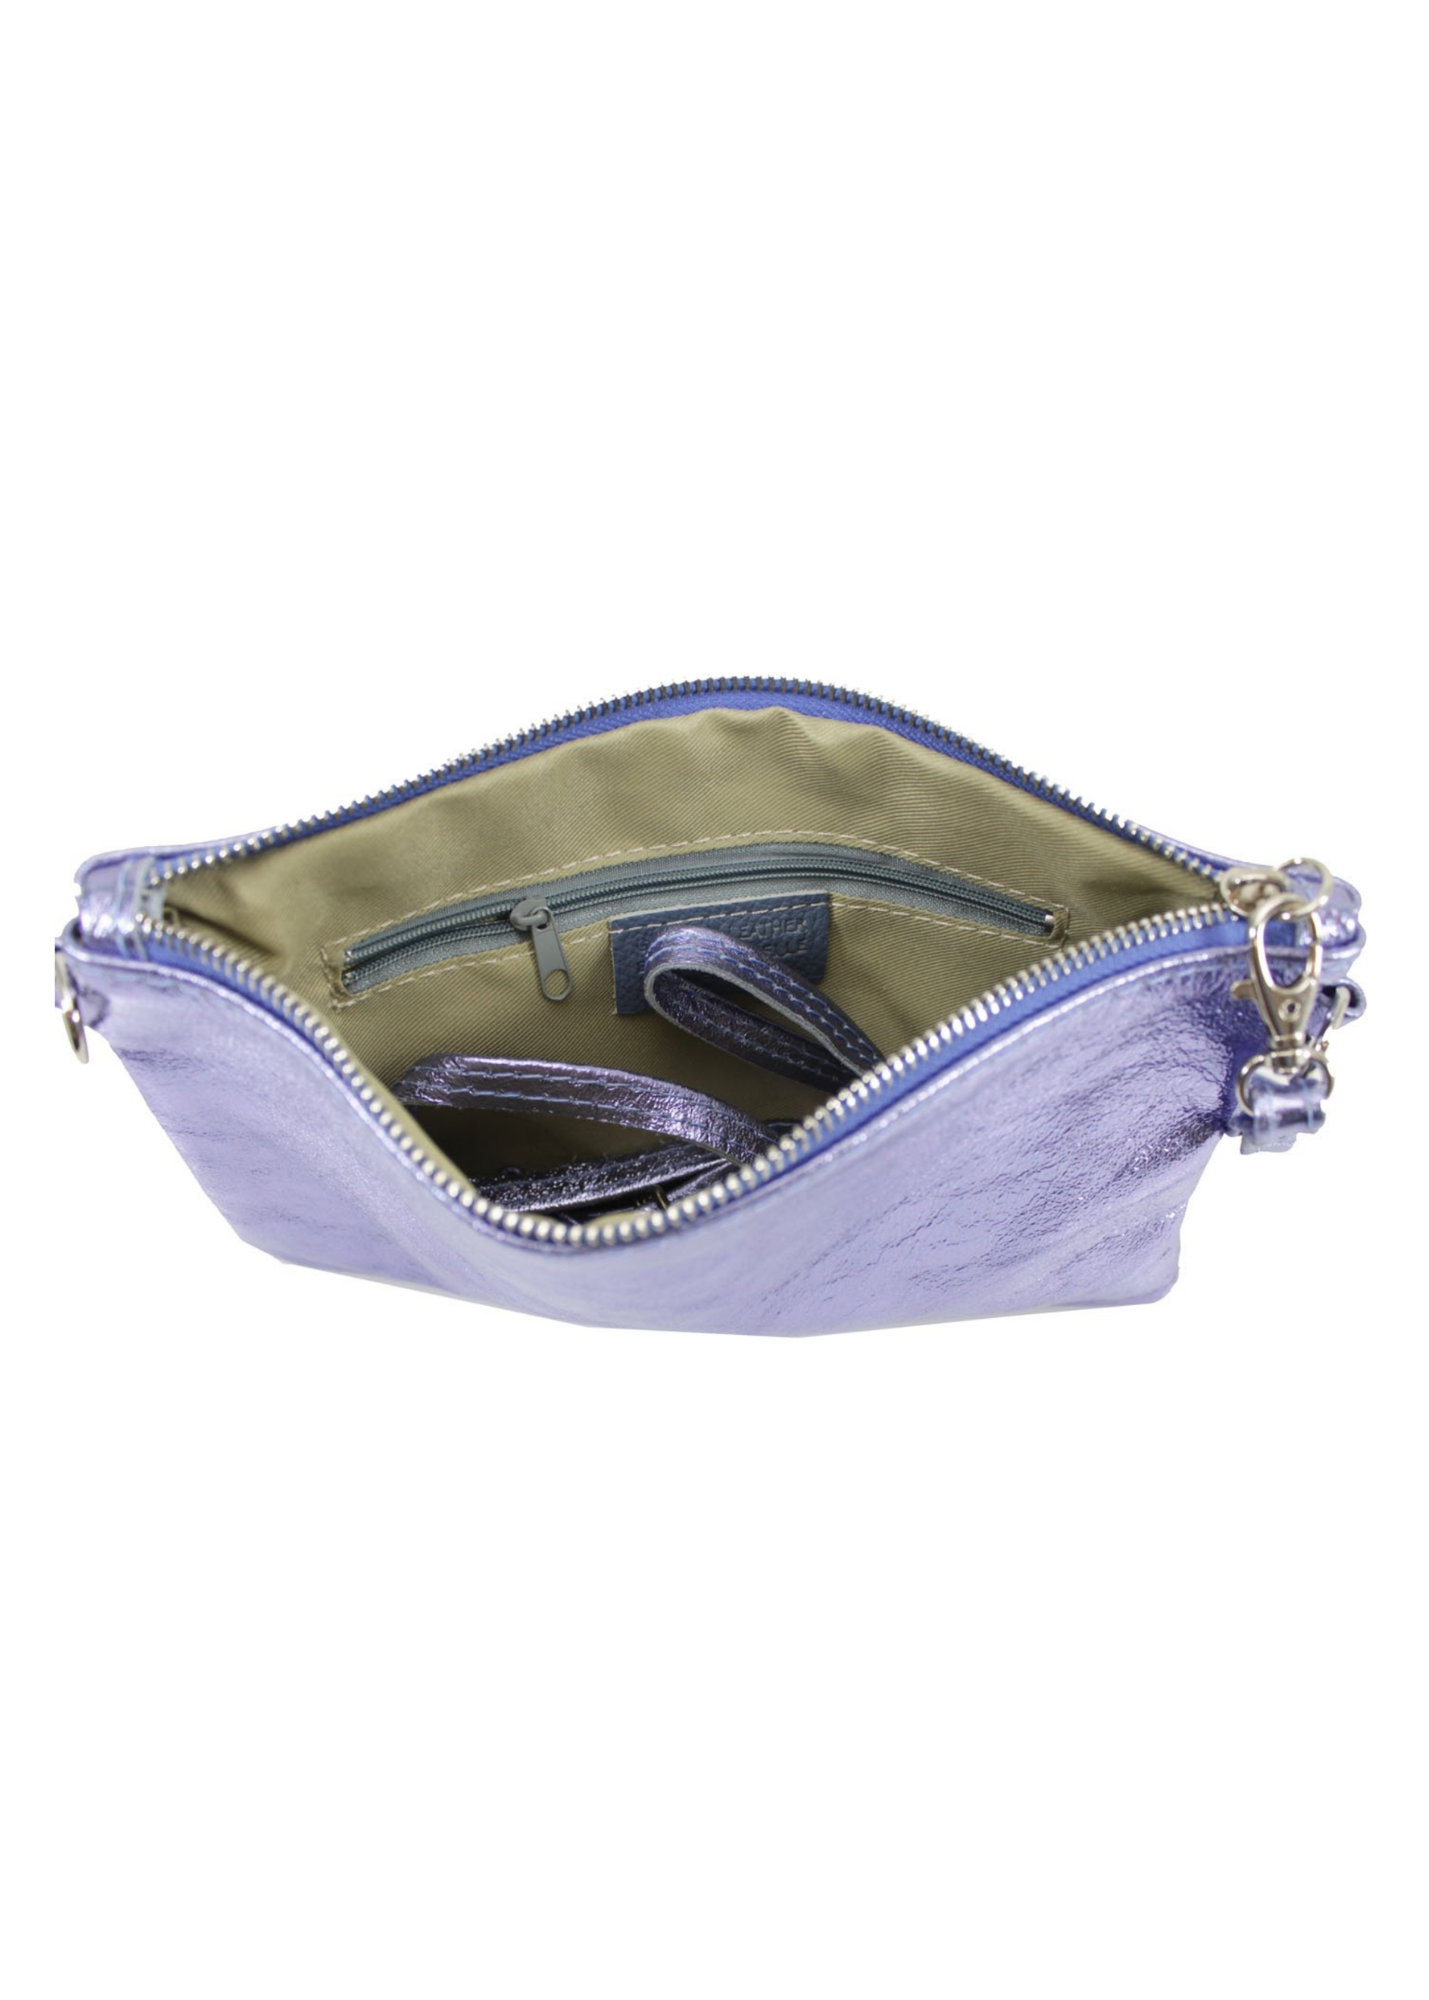 The Edit - Metallic Lilac Leather Shoulder Bag